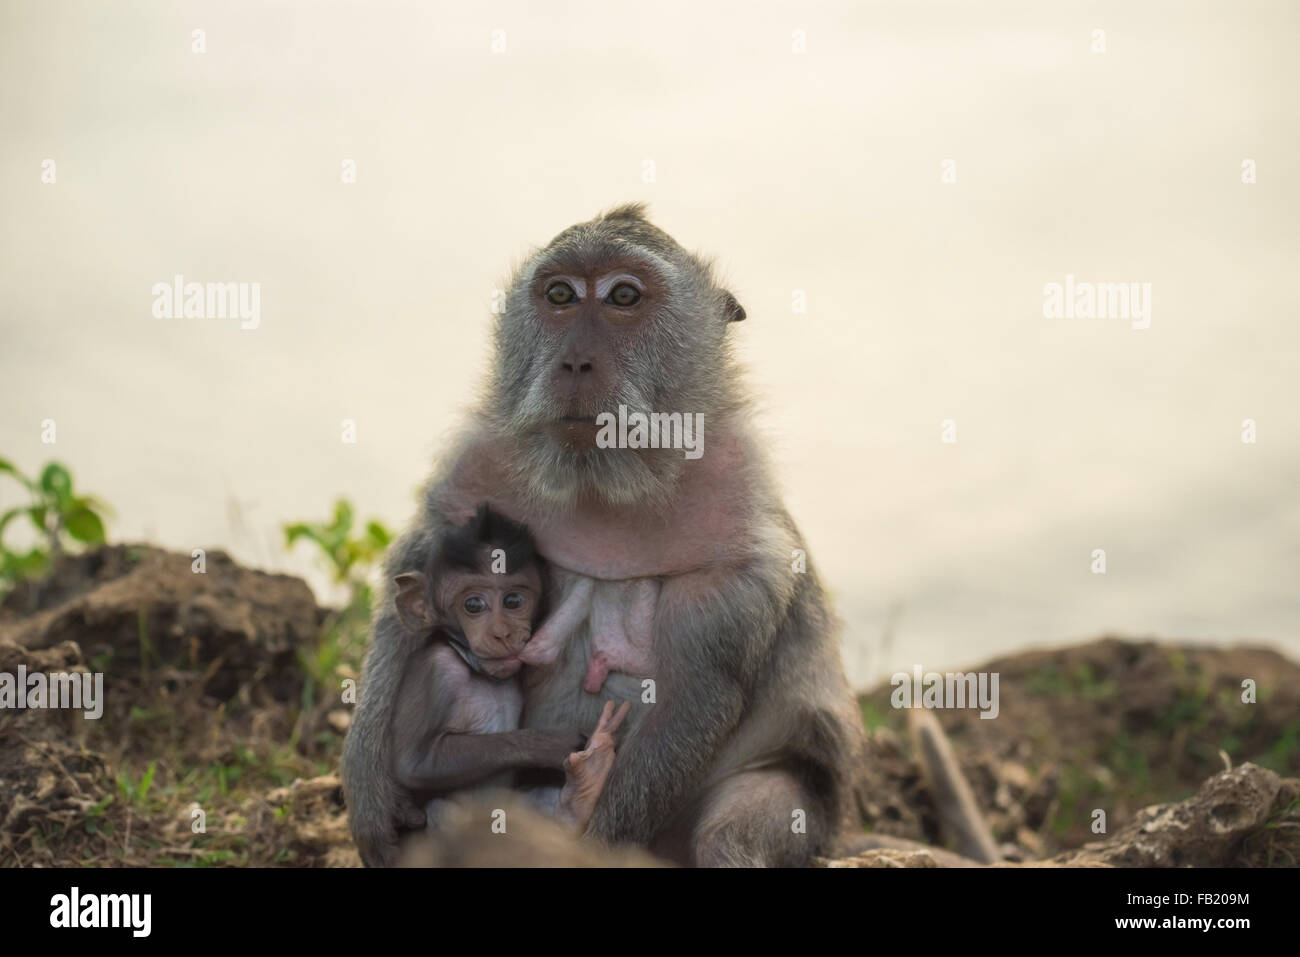 Wild monkey mom breastfeeding curious baby ape in their natural habitat. Stock Photo